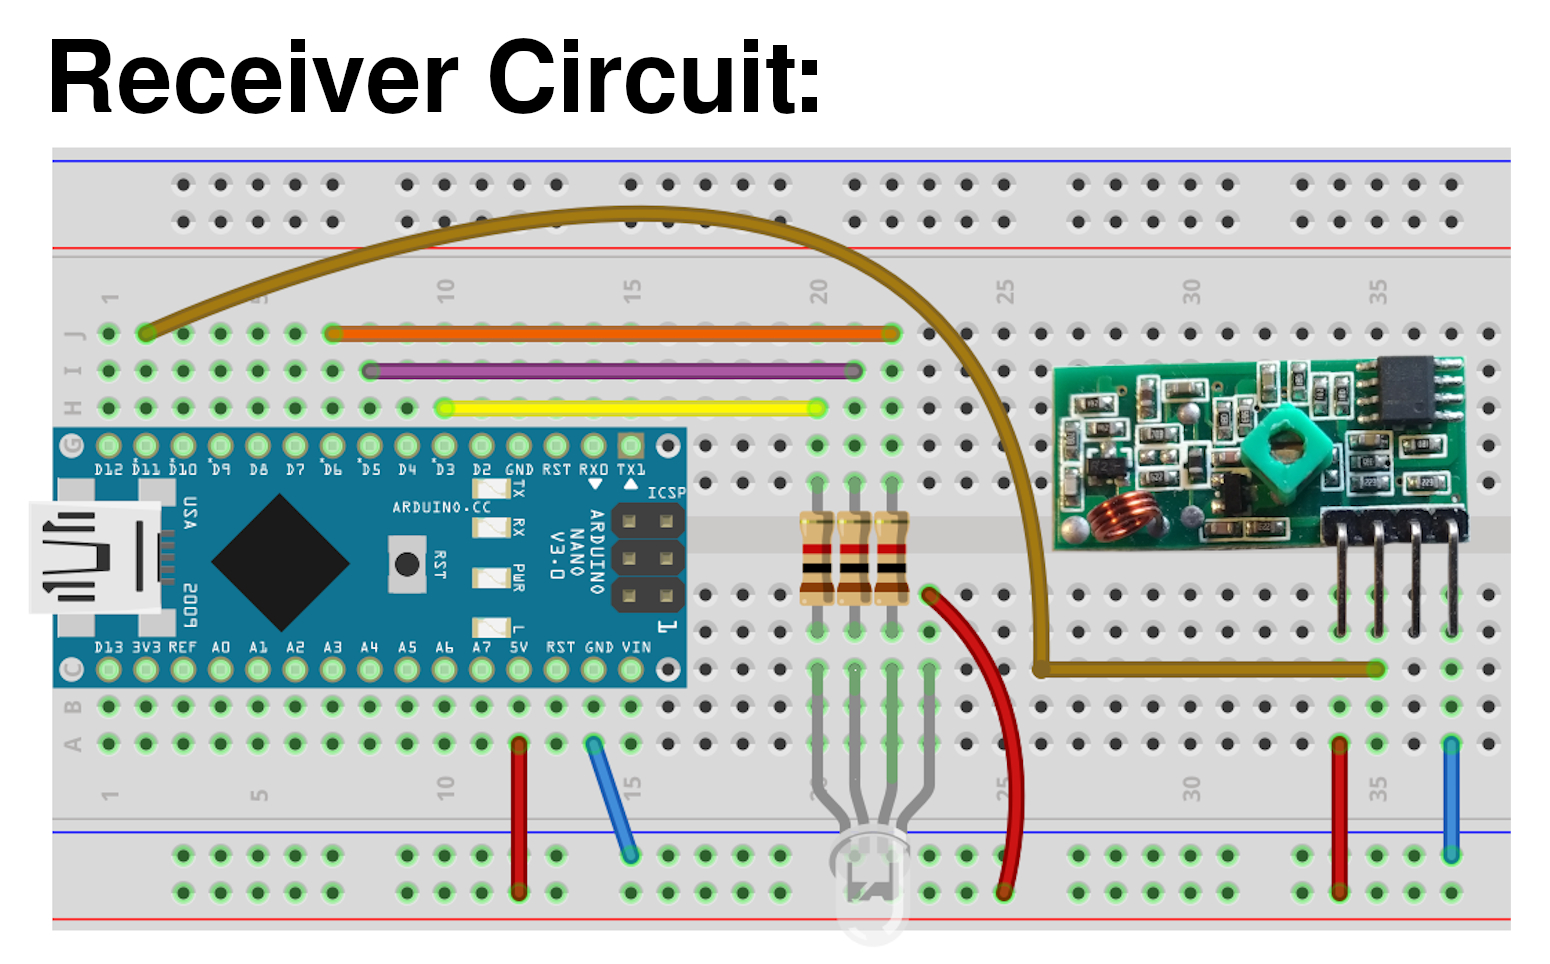 Schematics of the receiver circuit